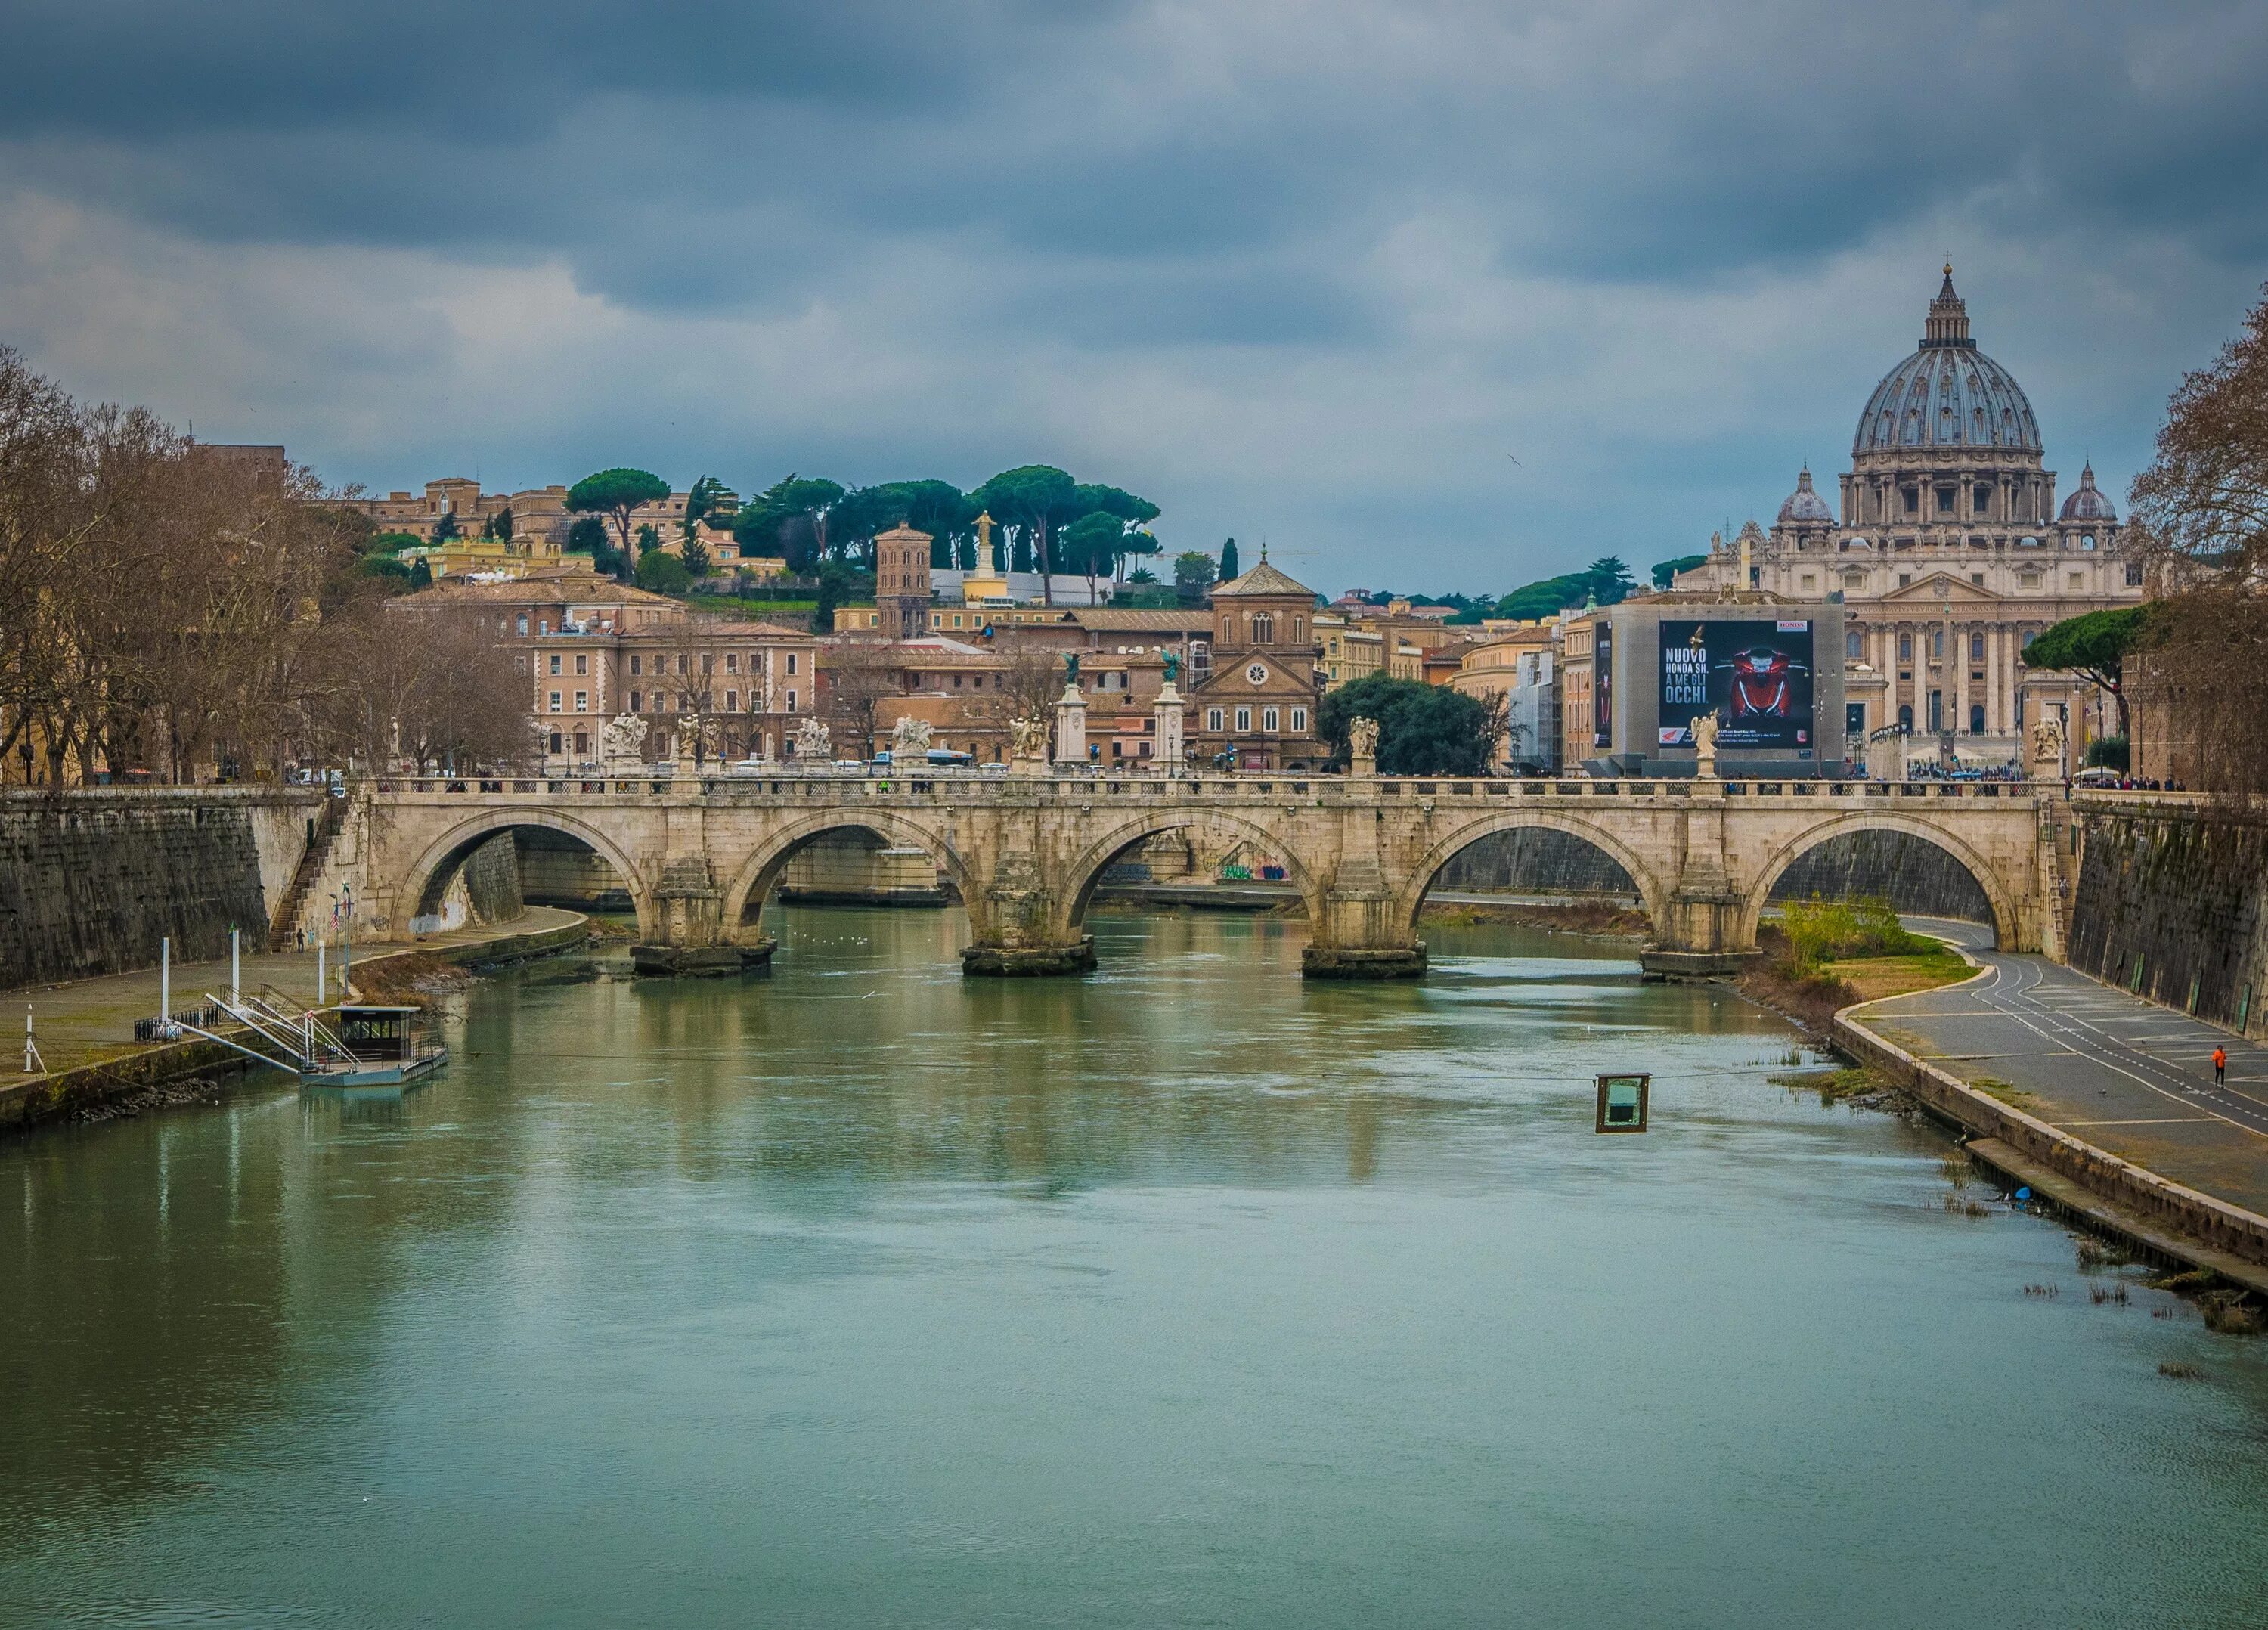 Река Тибр в Италии. Италия Рим река Тибр. Ватикан река Тибр. Берег реки Тибра Рим. Италия каменный мост